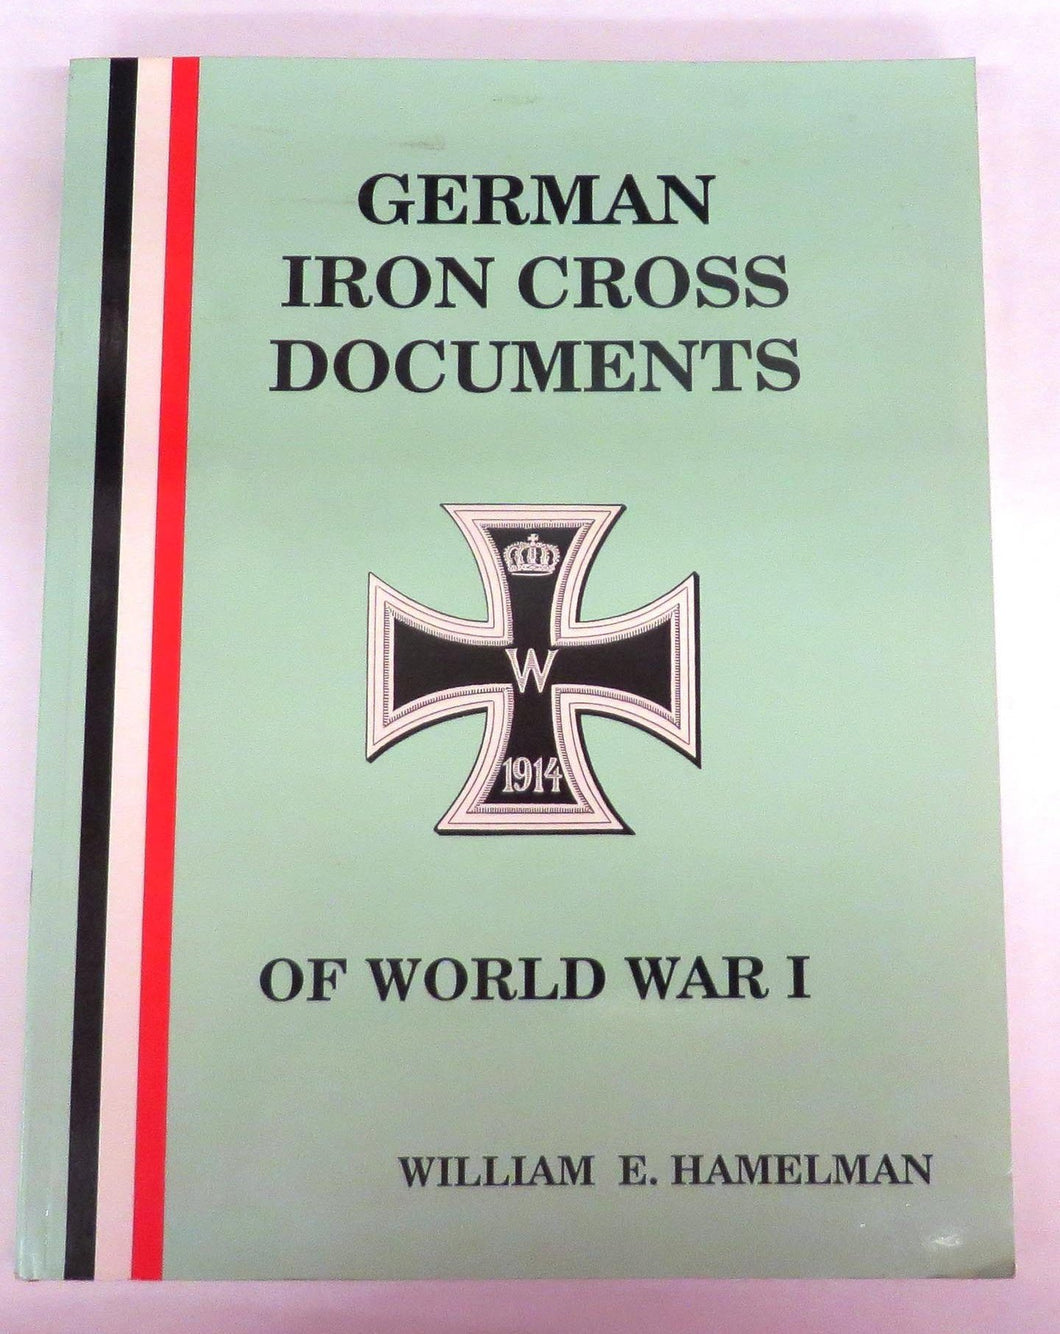 German Iron Cross Documents of World War I